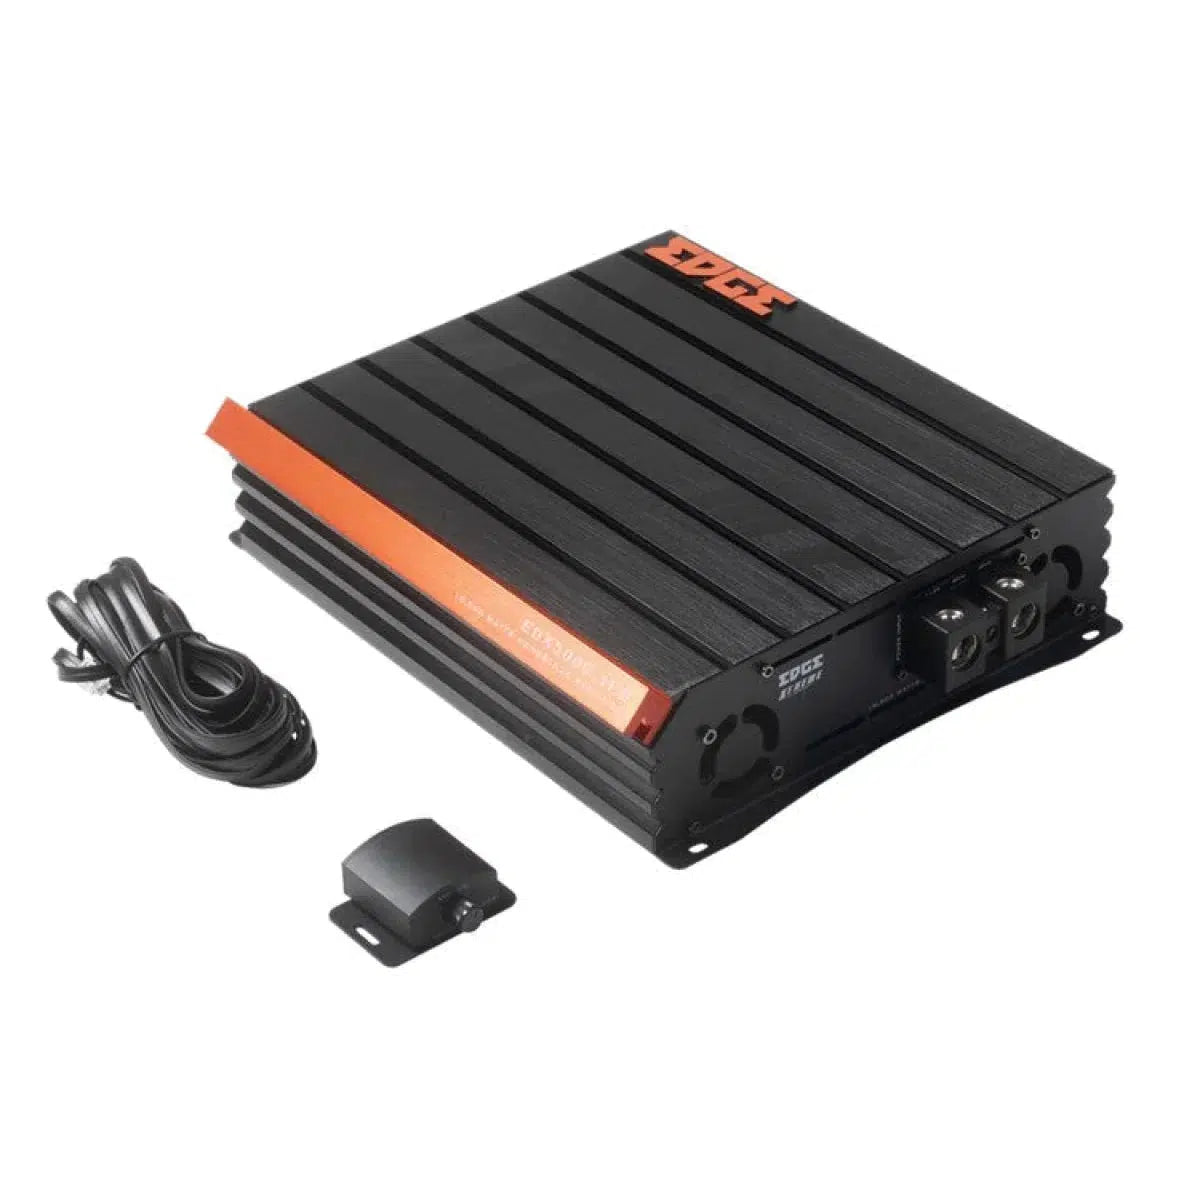 Edge Car Audio-Xtreme EDX5000.1FD-E0-1-canal Amplificateur-Masori.fr